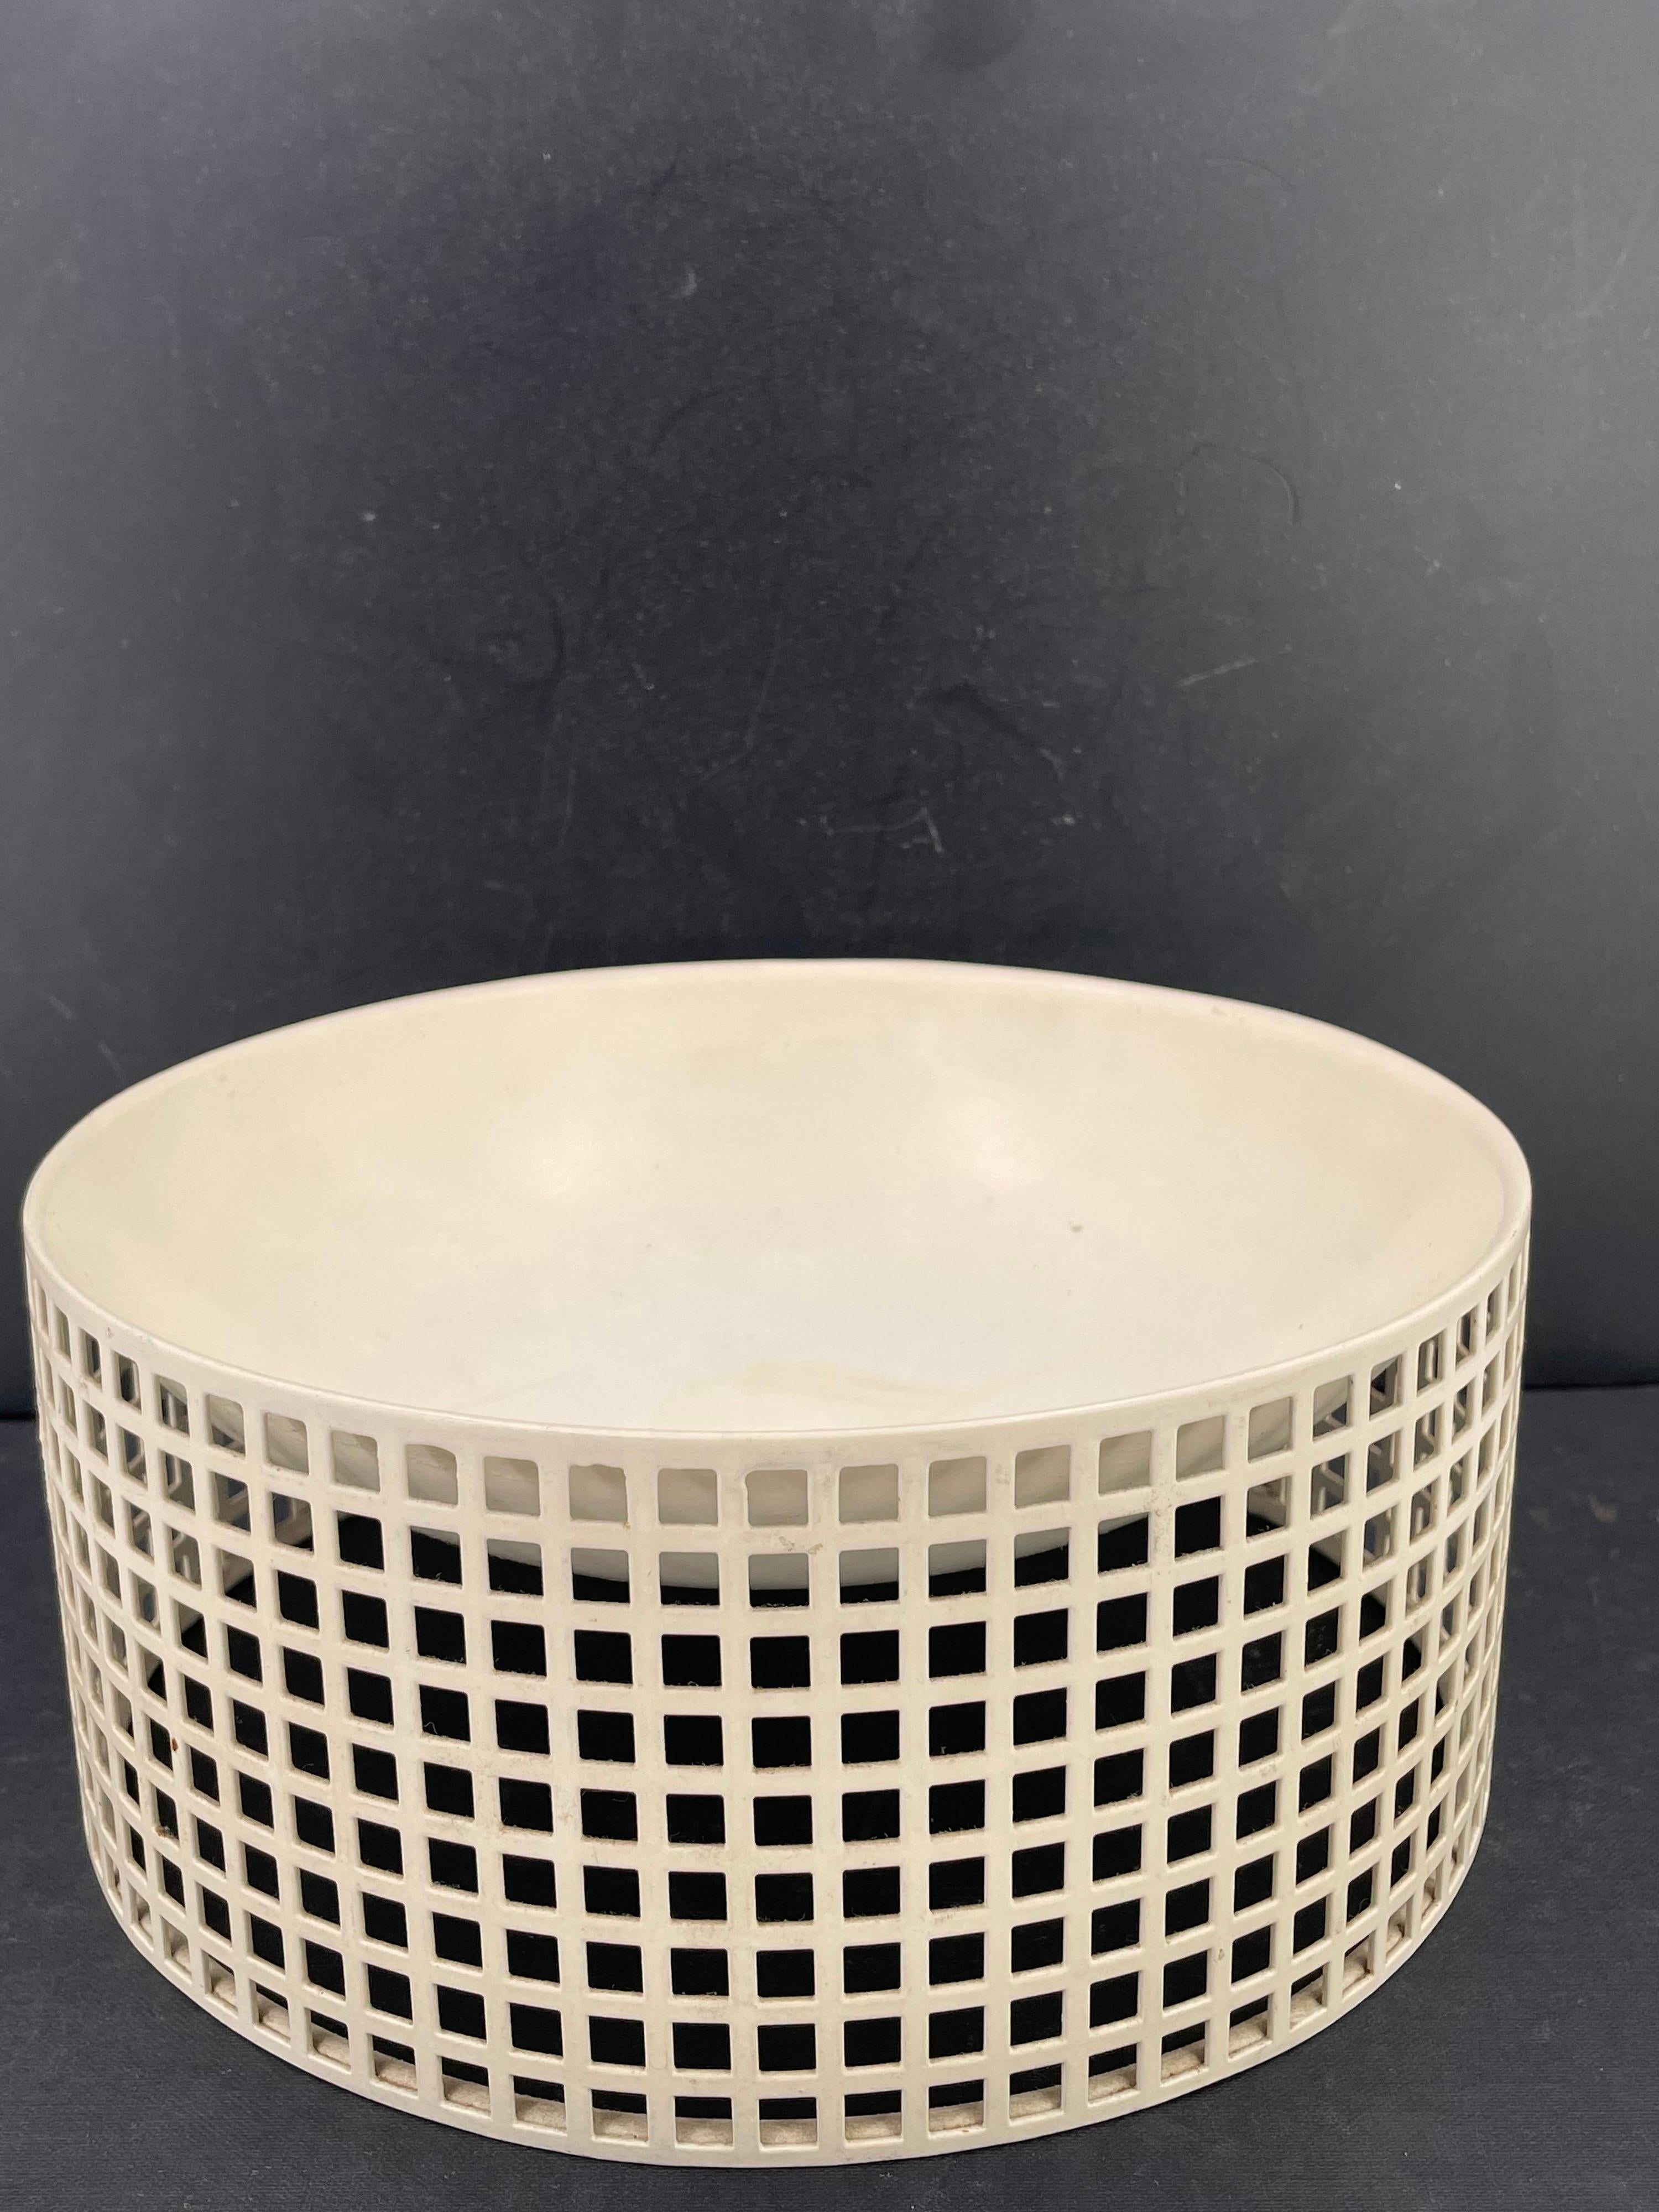 Post-Modern Rare Perforated Metal Bowl Designed by Joseph Hoffman for Bieffeplast